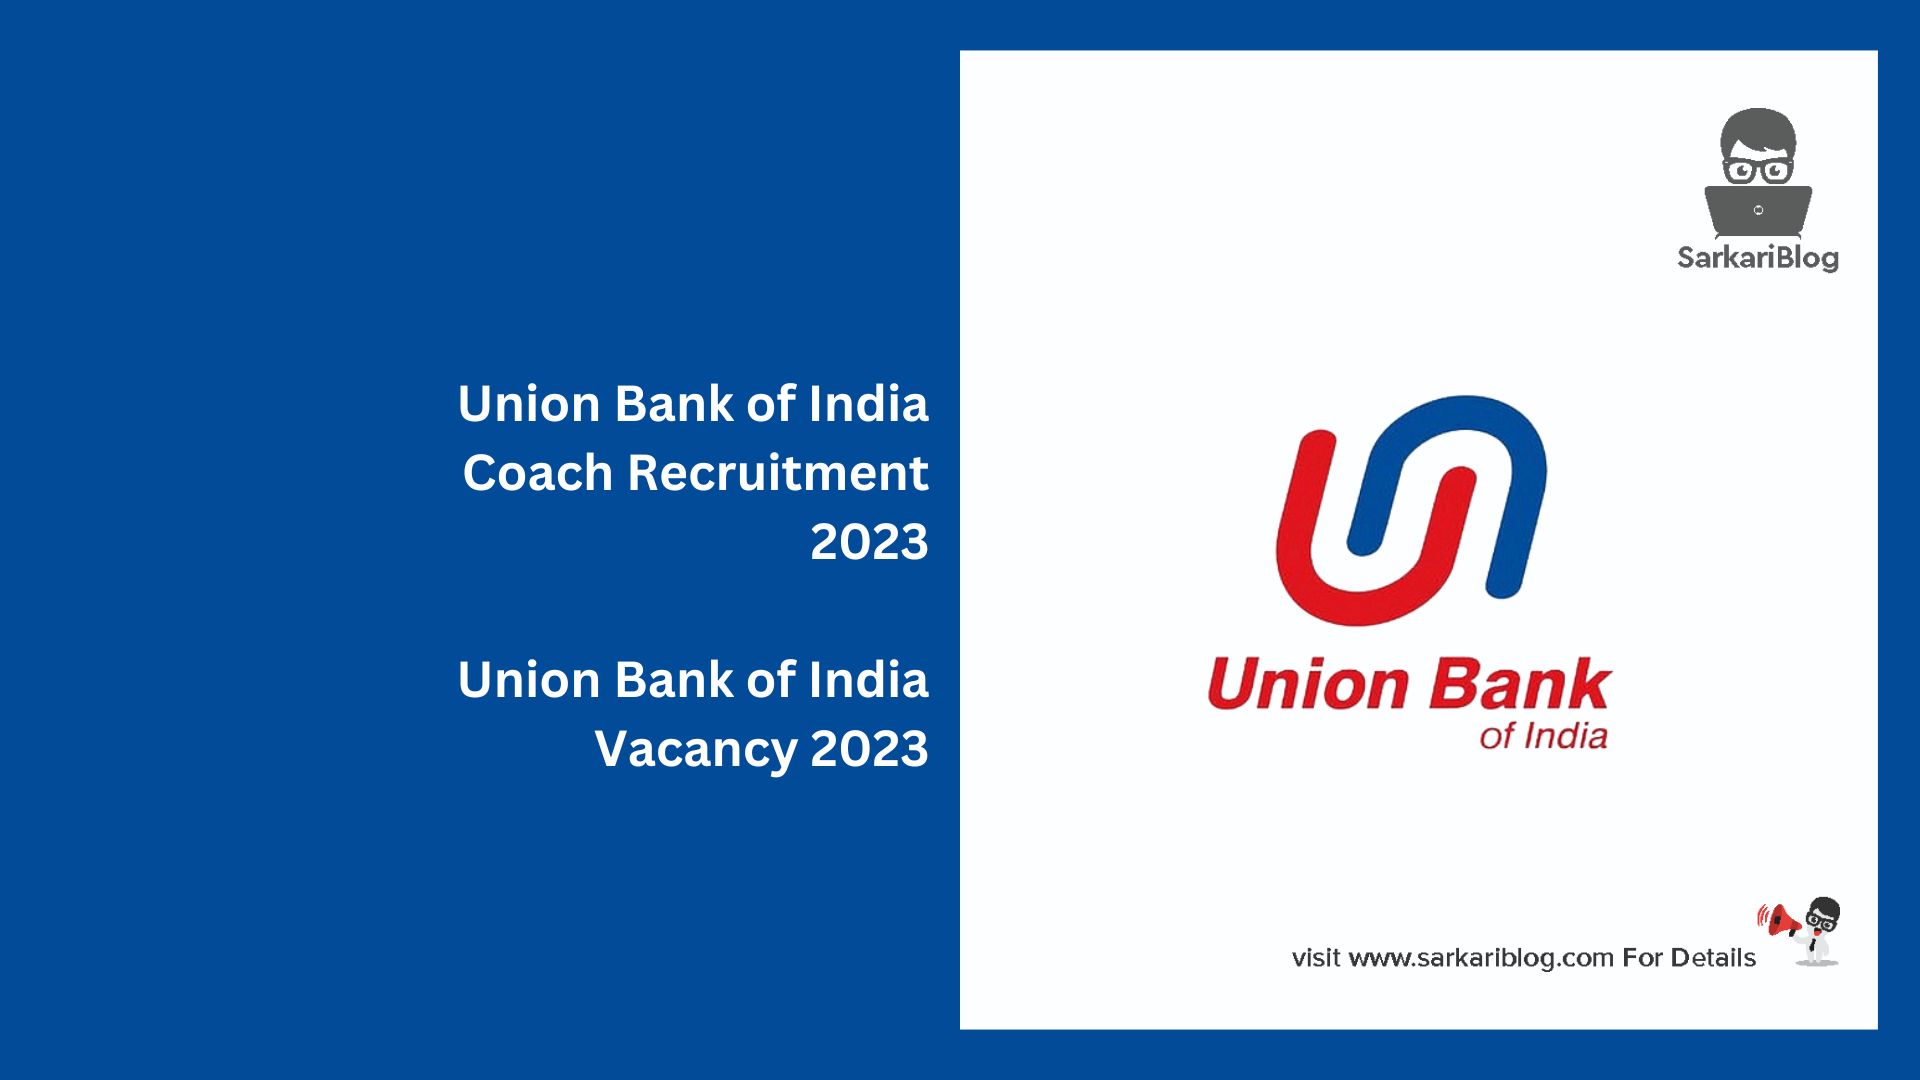 Union Bank of India Coach Recruitment 2023